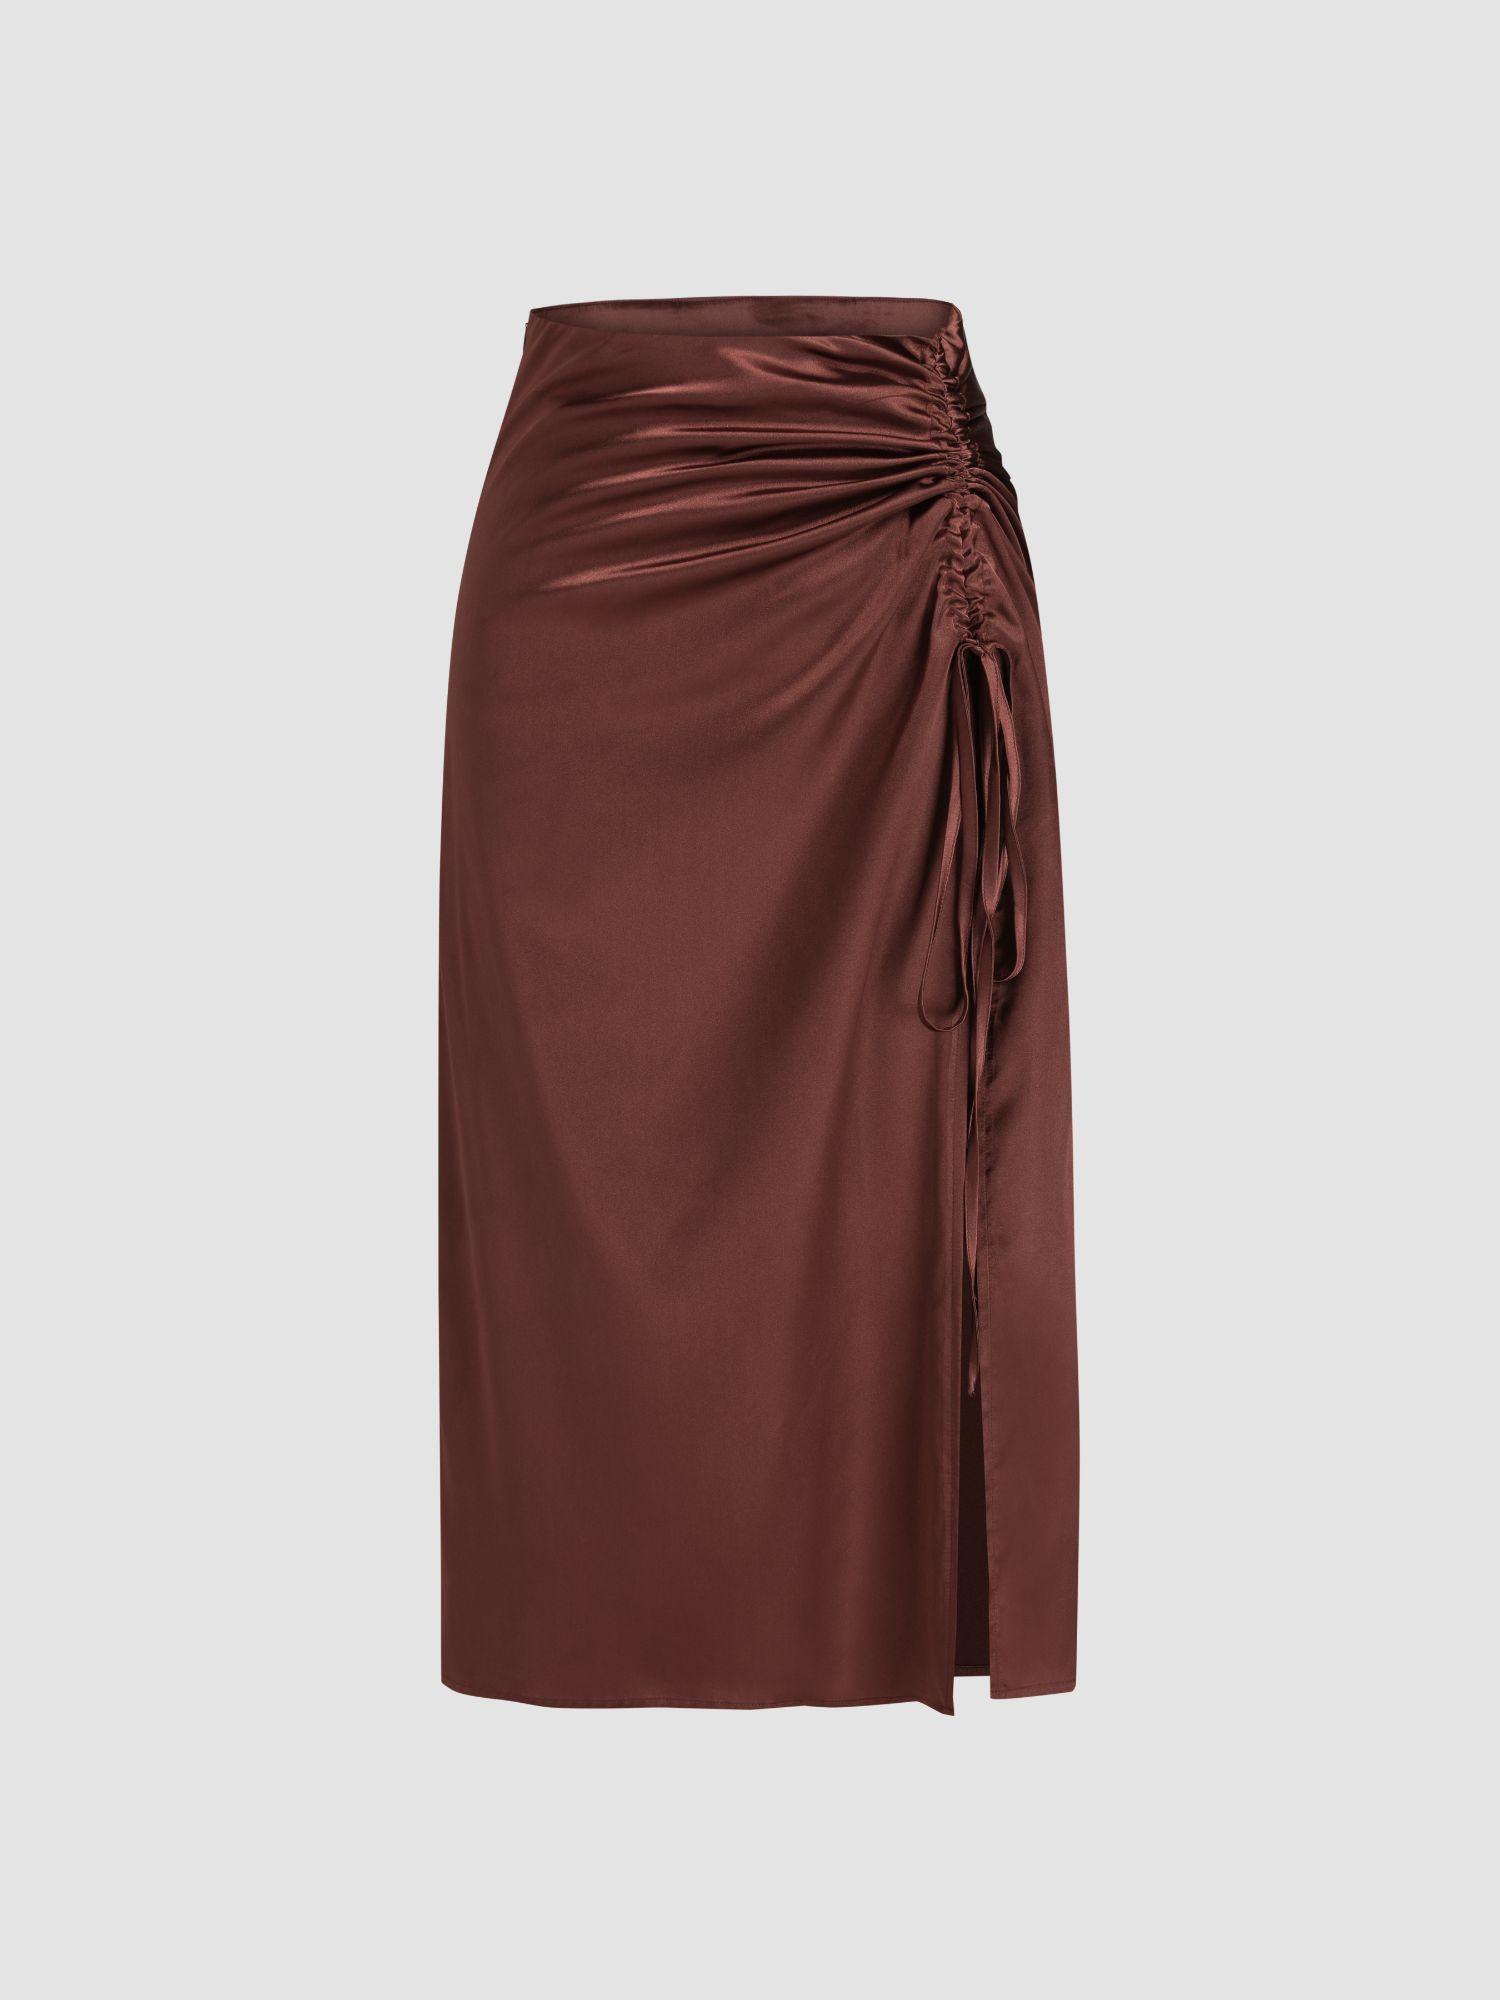 satin brown drawstring midi skirt